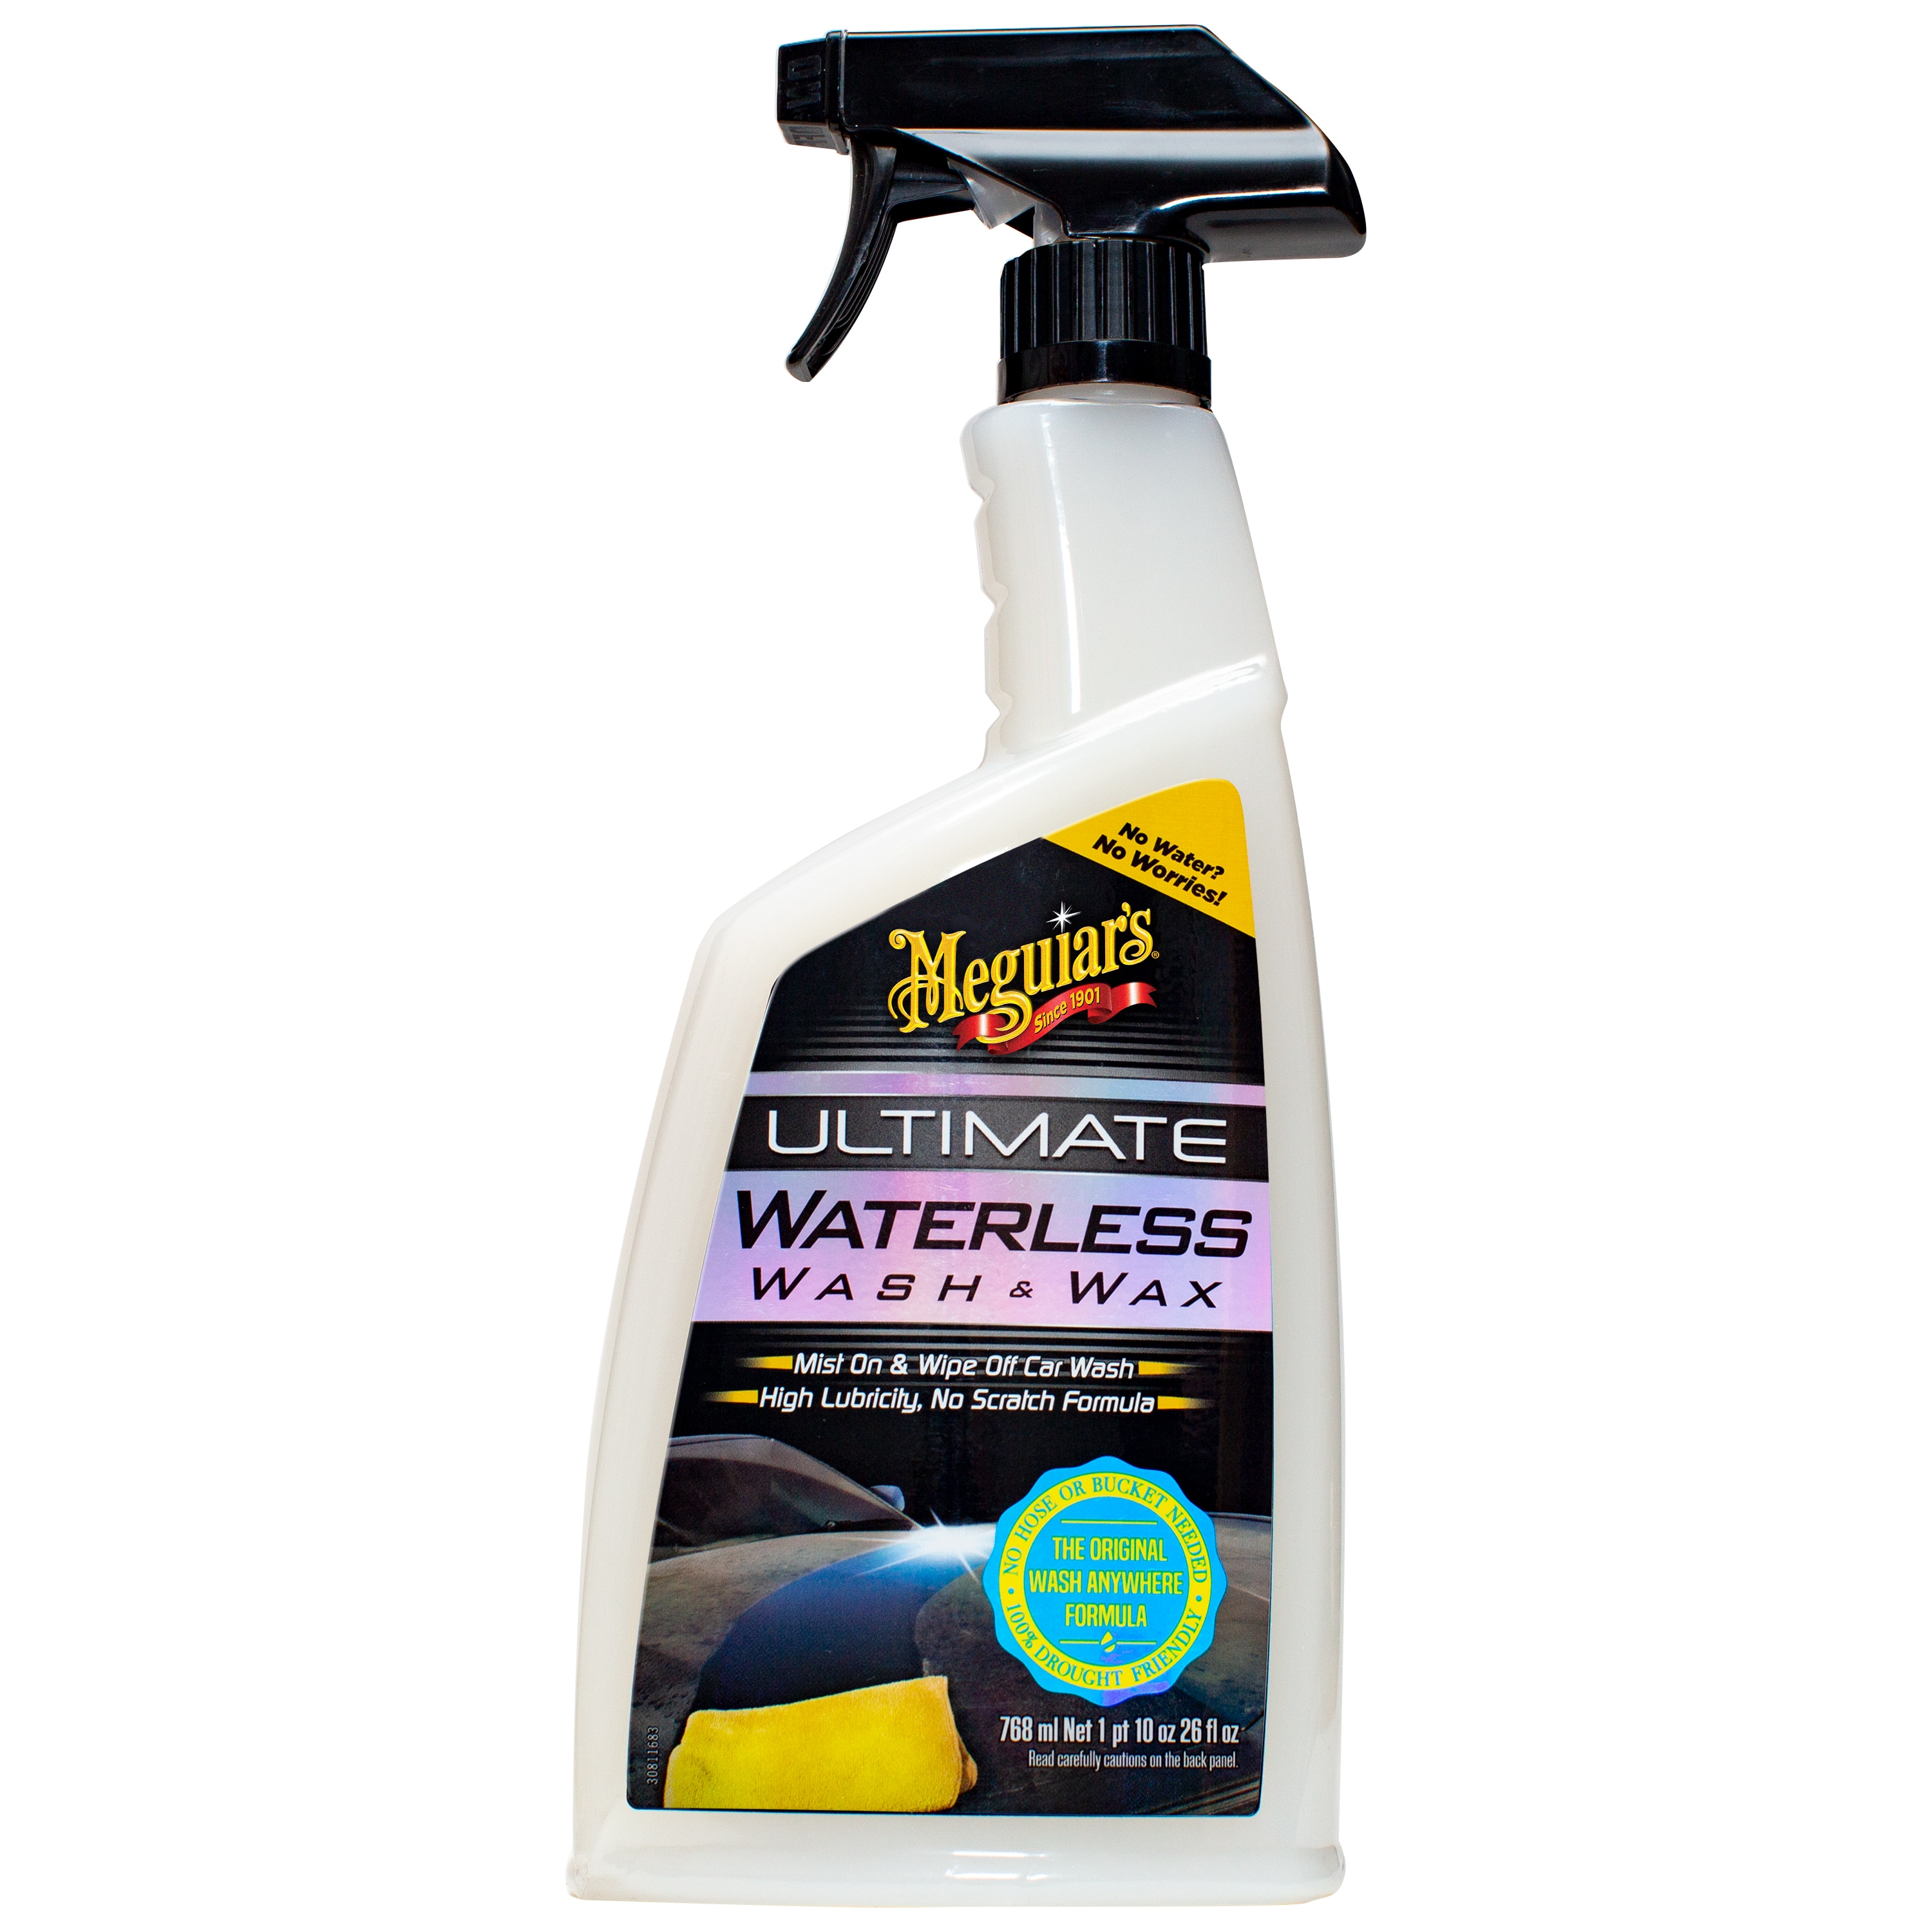 Turtle Wax 1-Step Wax & Dry - 26 fl oz spray bottle